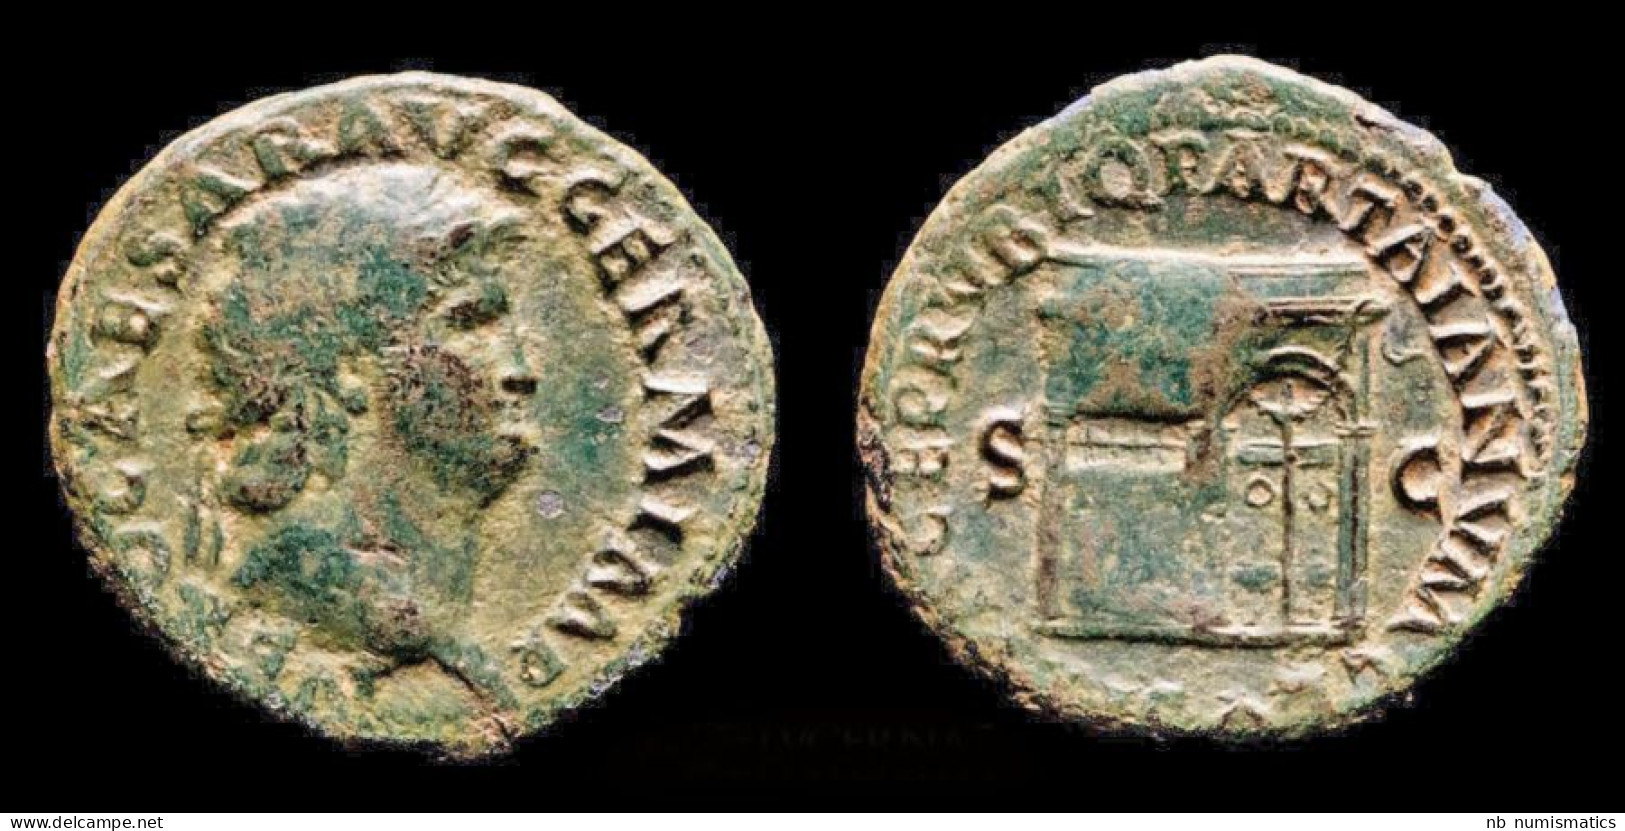 Nero AE As Temple Of Janus - The Julio-Claudians (27 BC To 69 AD)